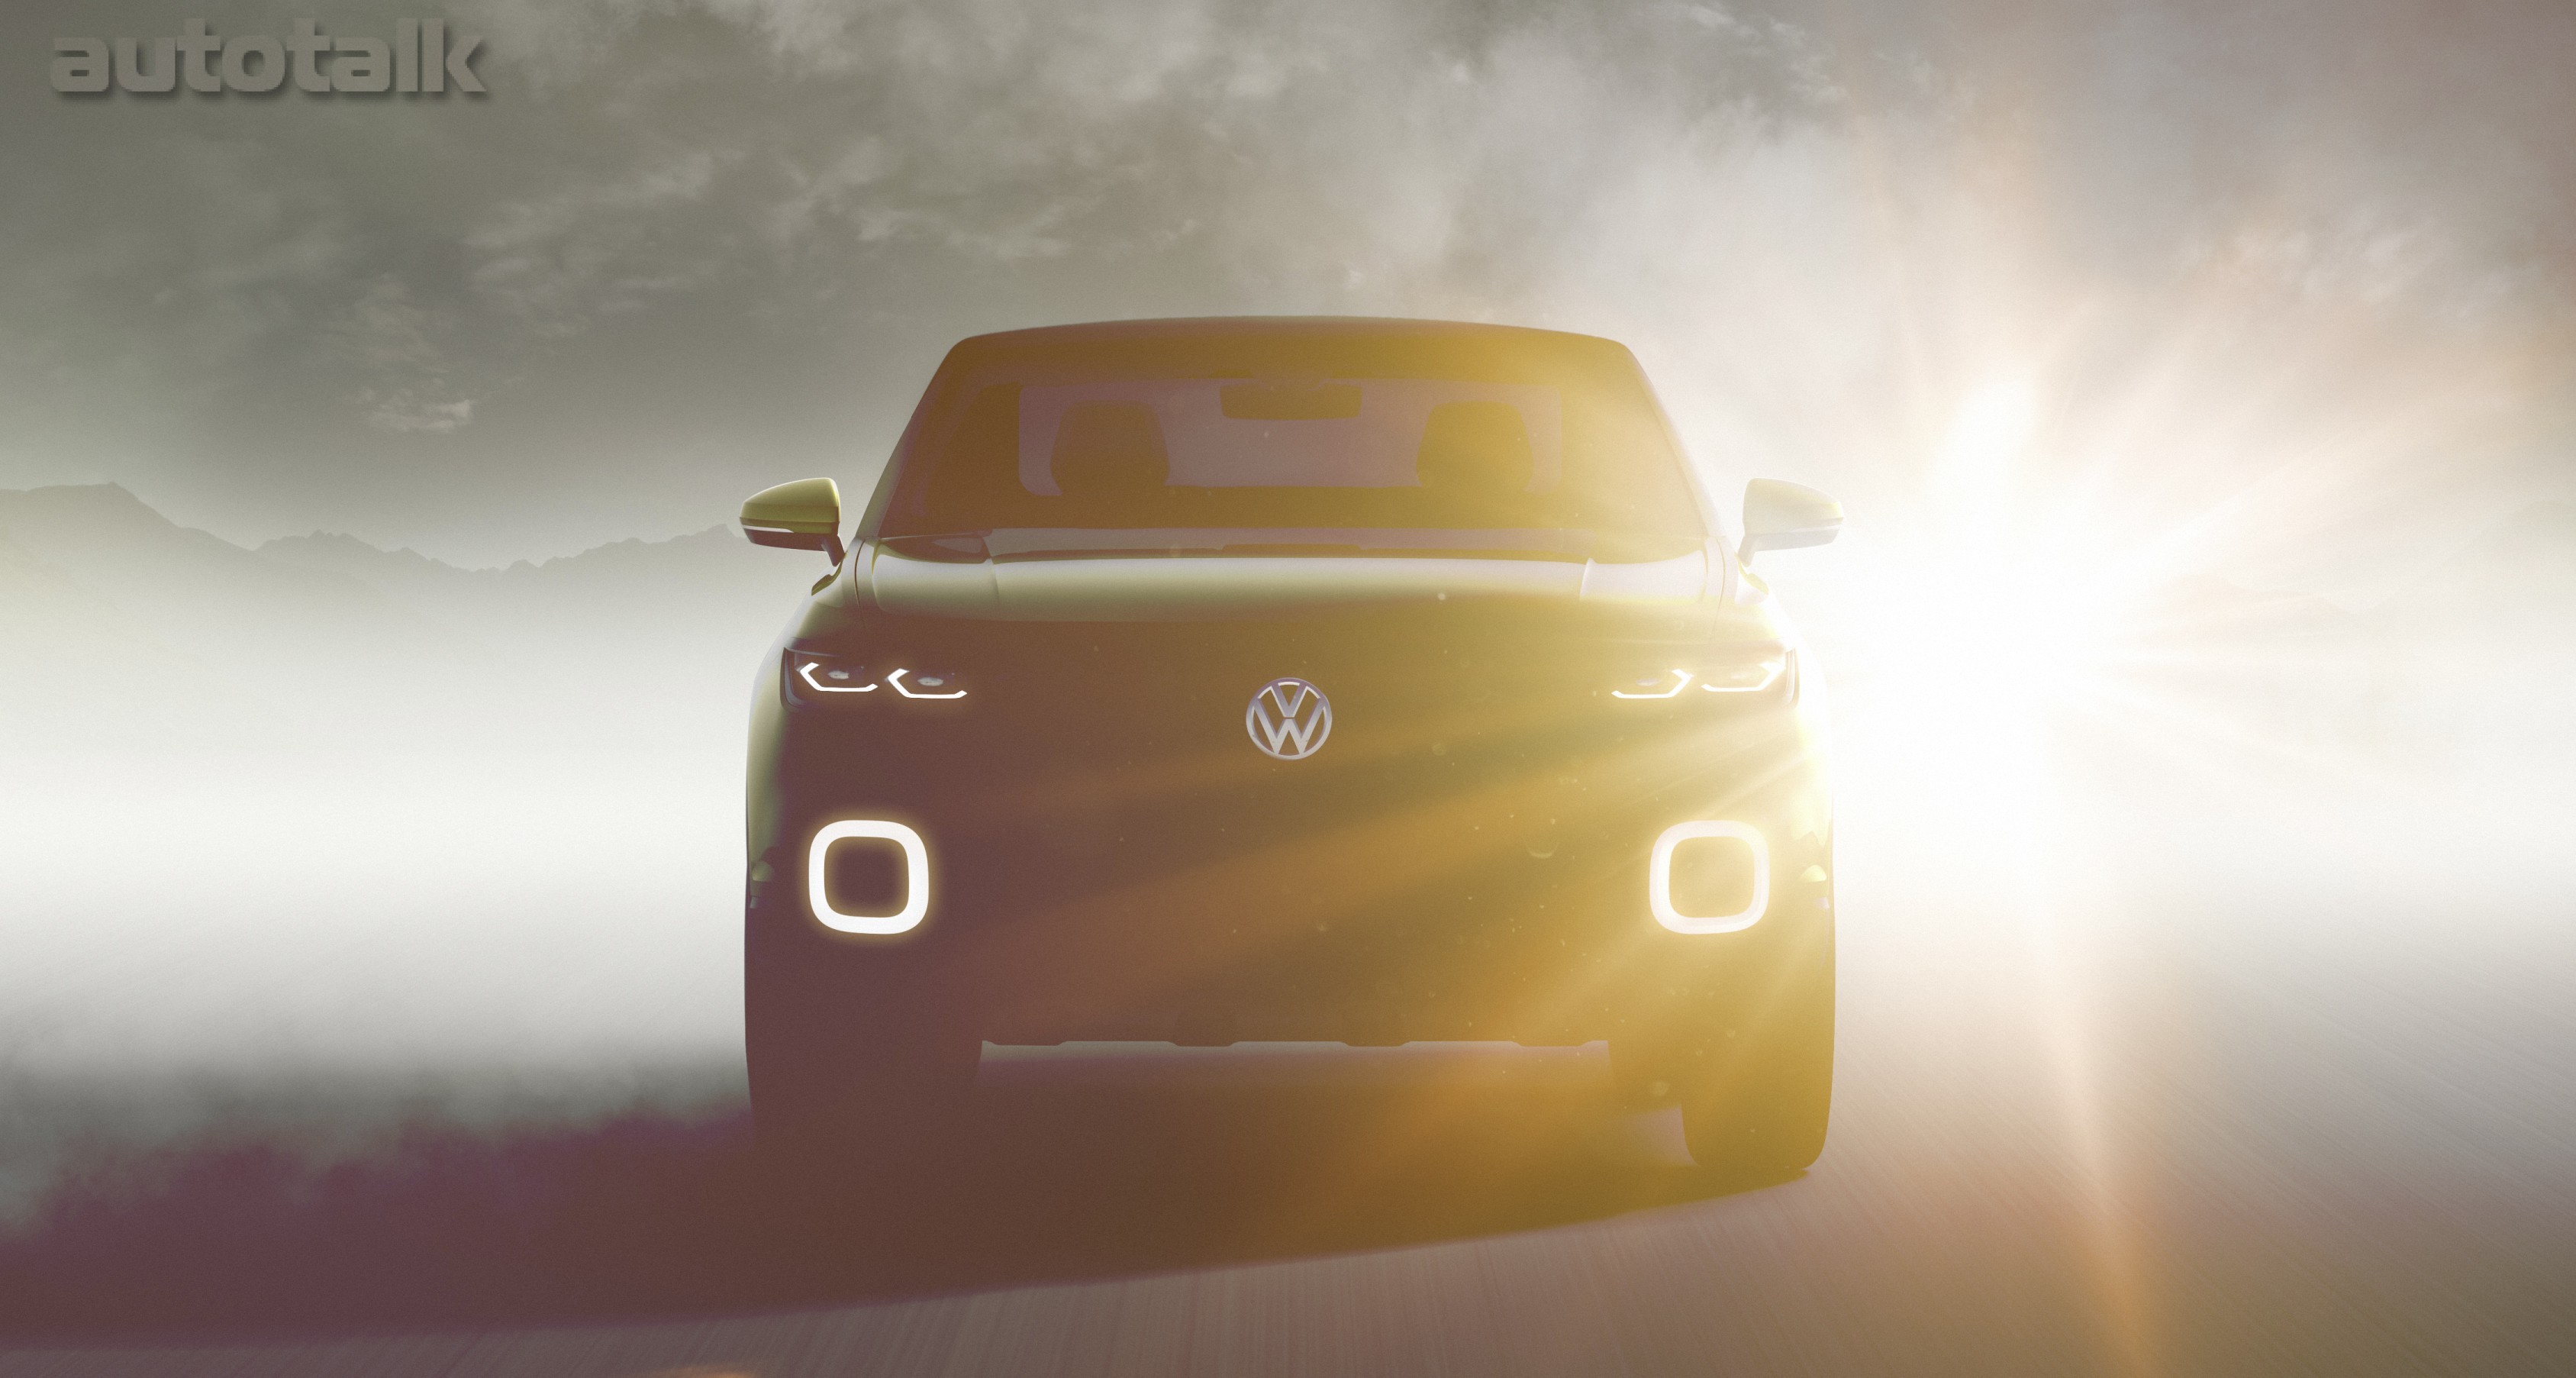 Volkswagen concept SUV